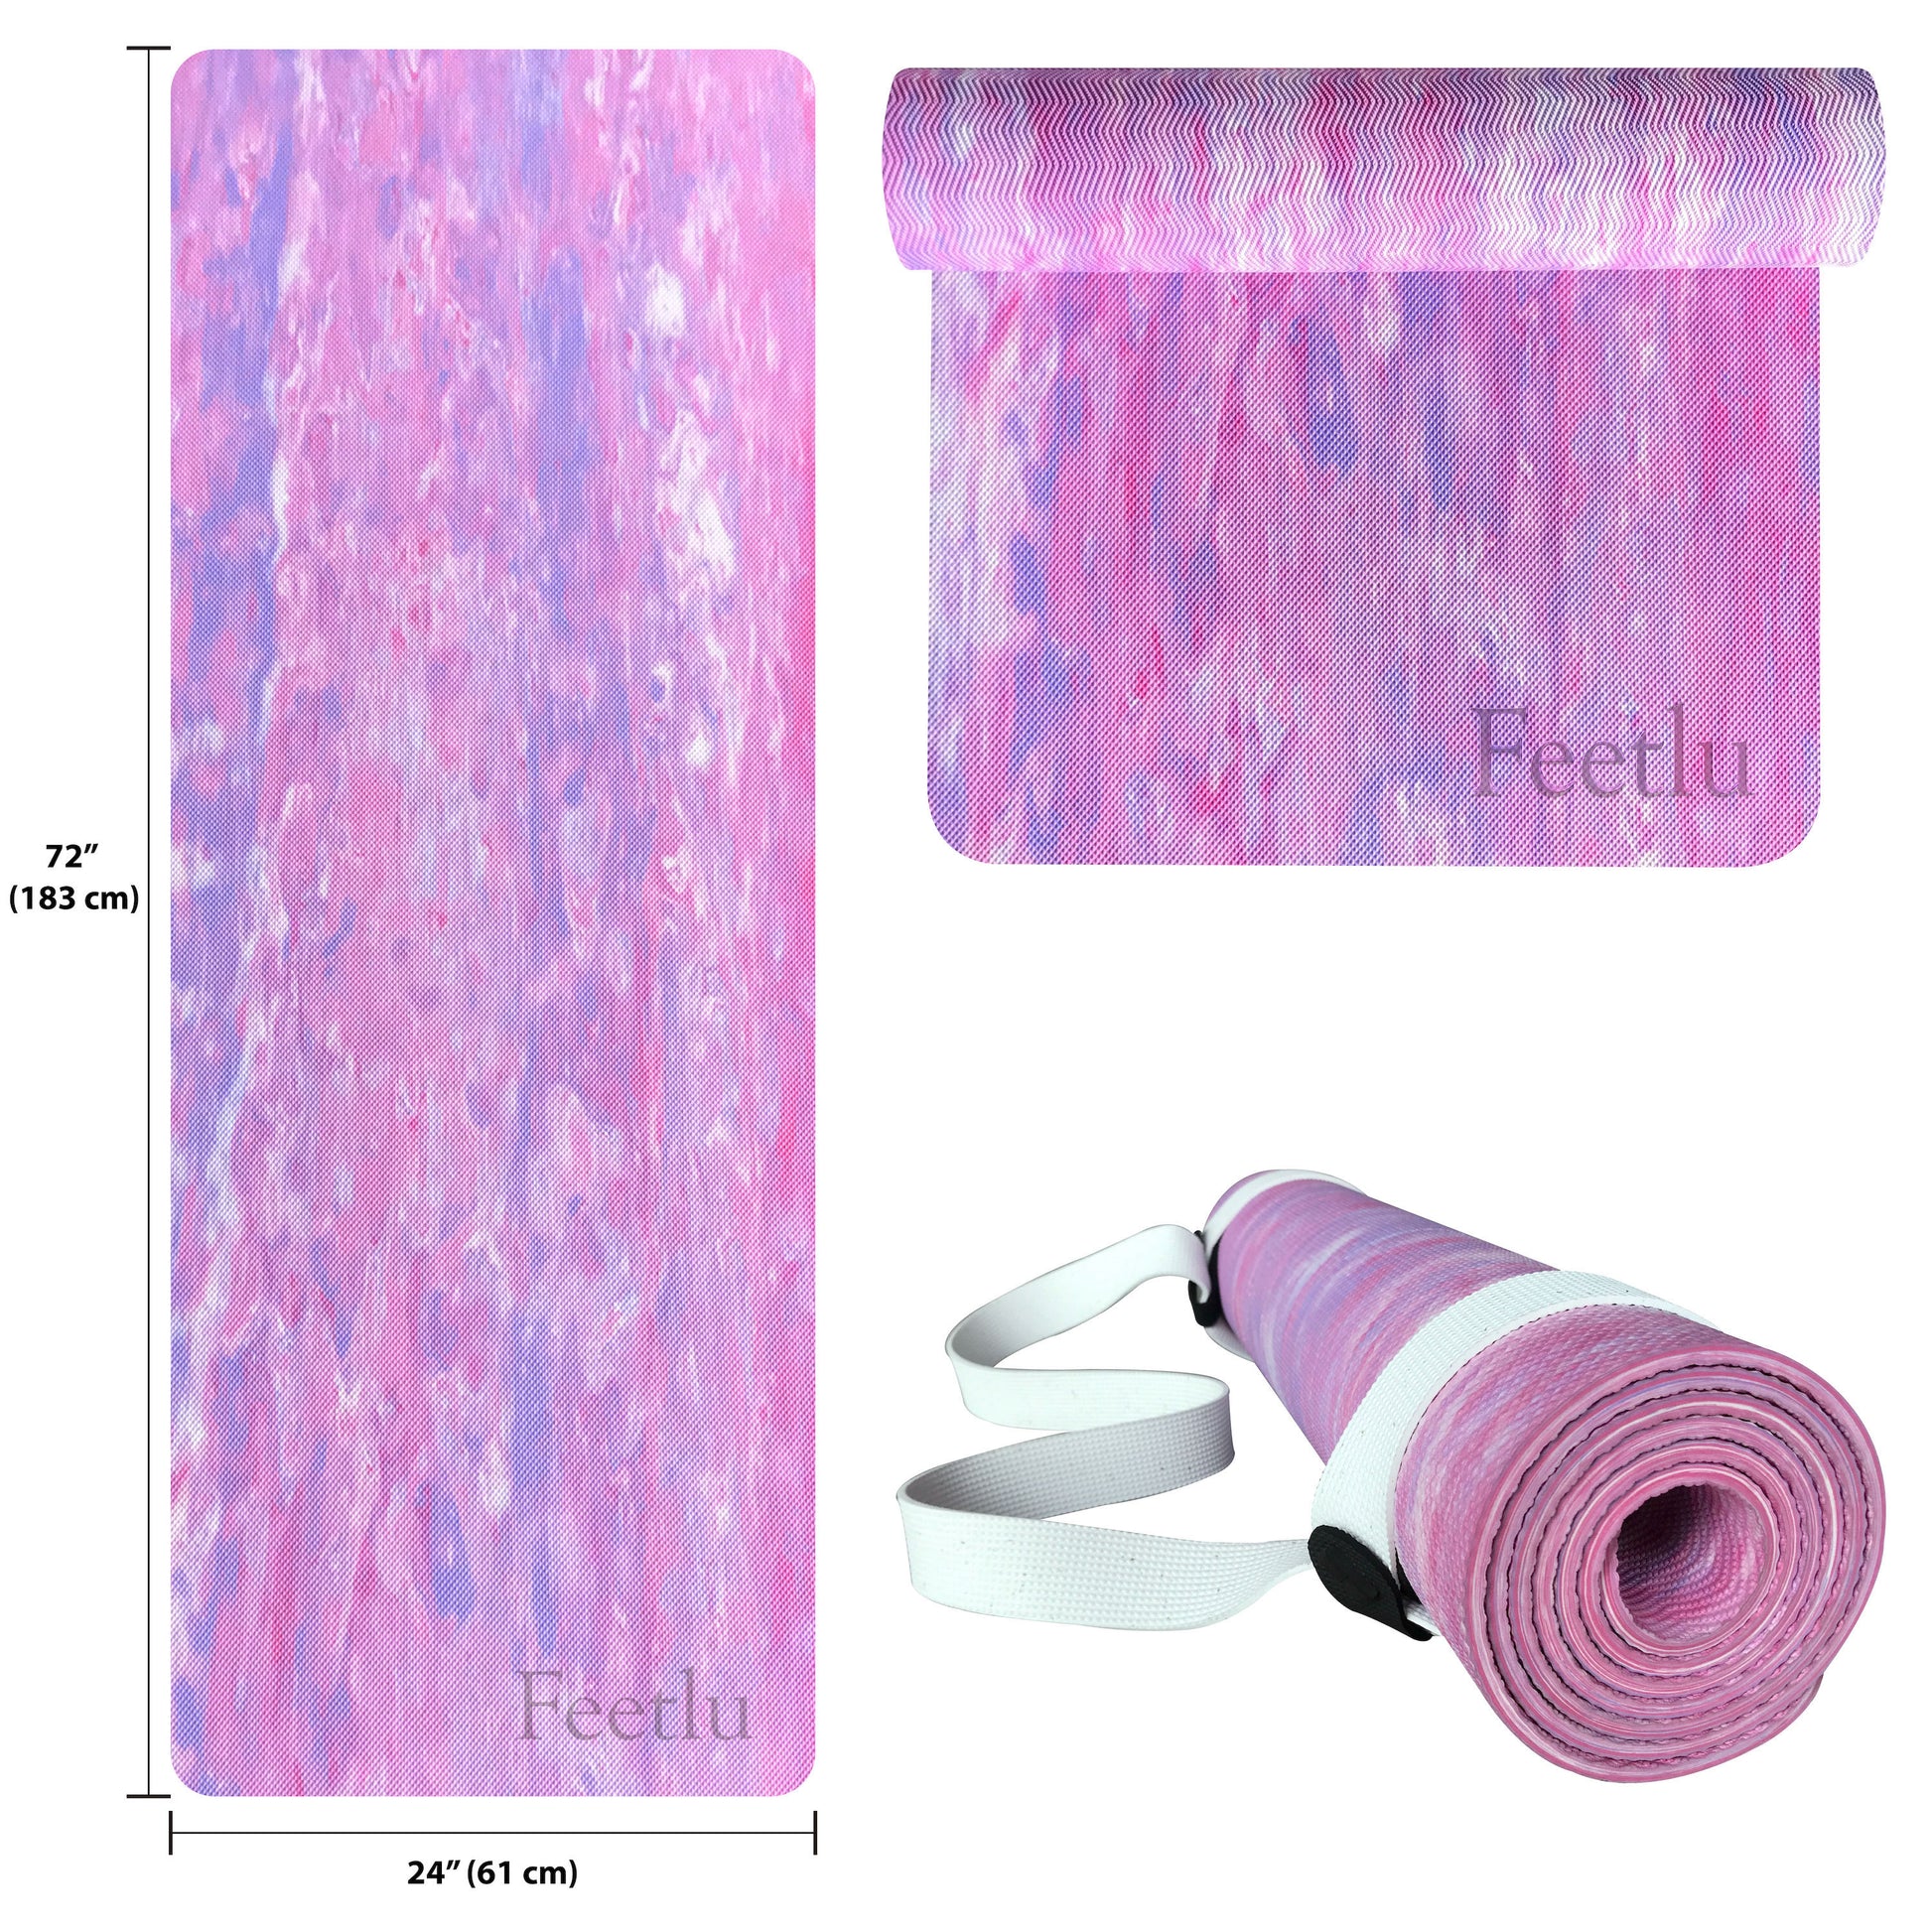 Extra Thick Yoga Mat | Pink and Purple Yoga Mat | Feetlu